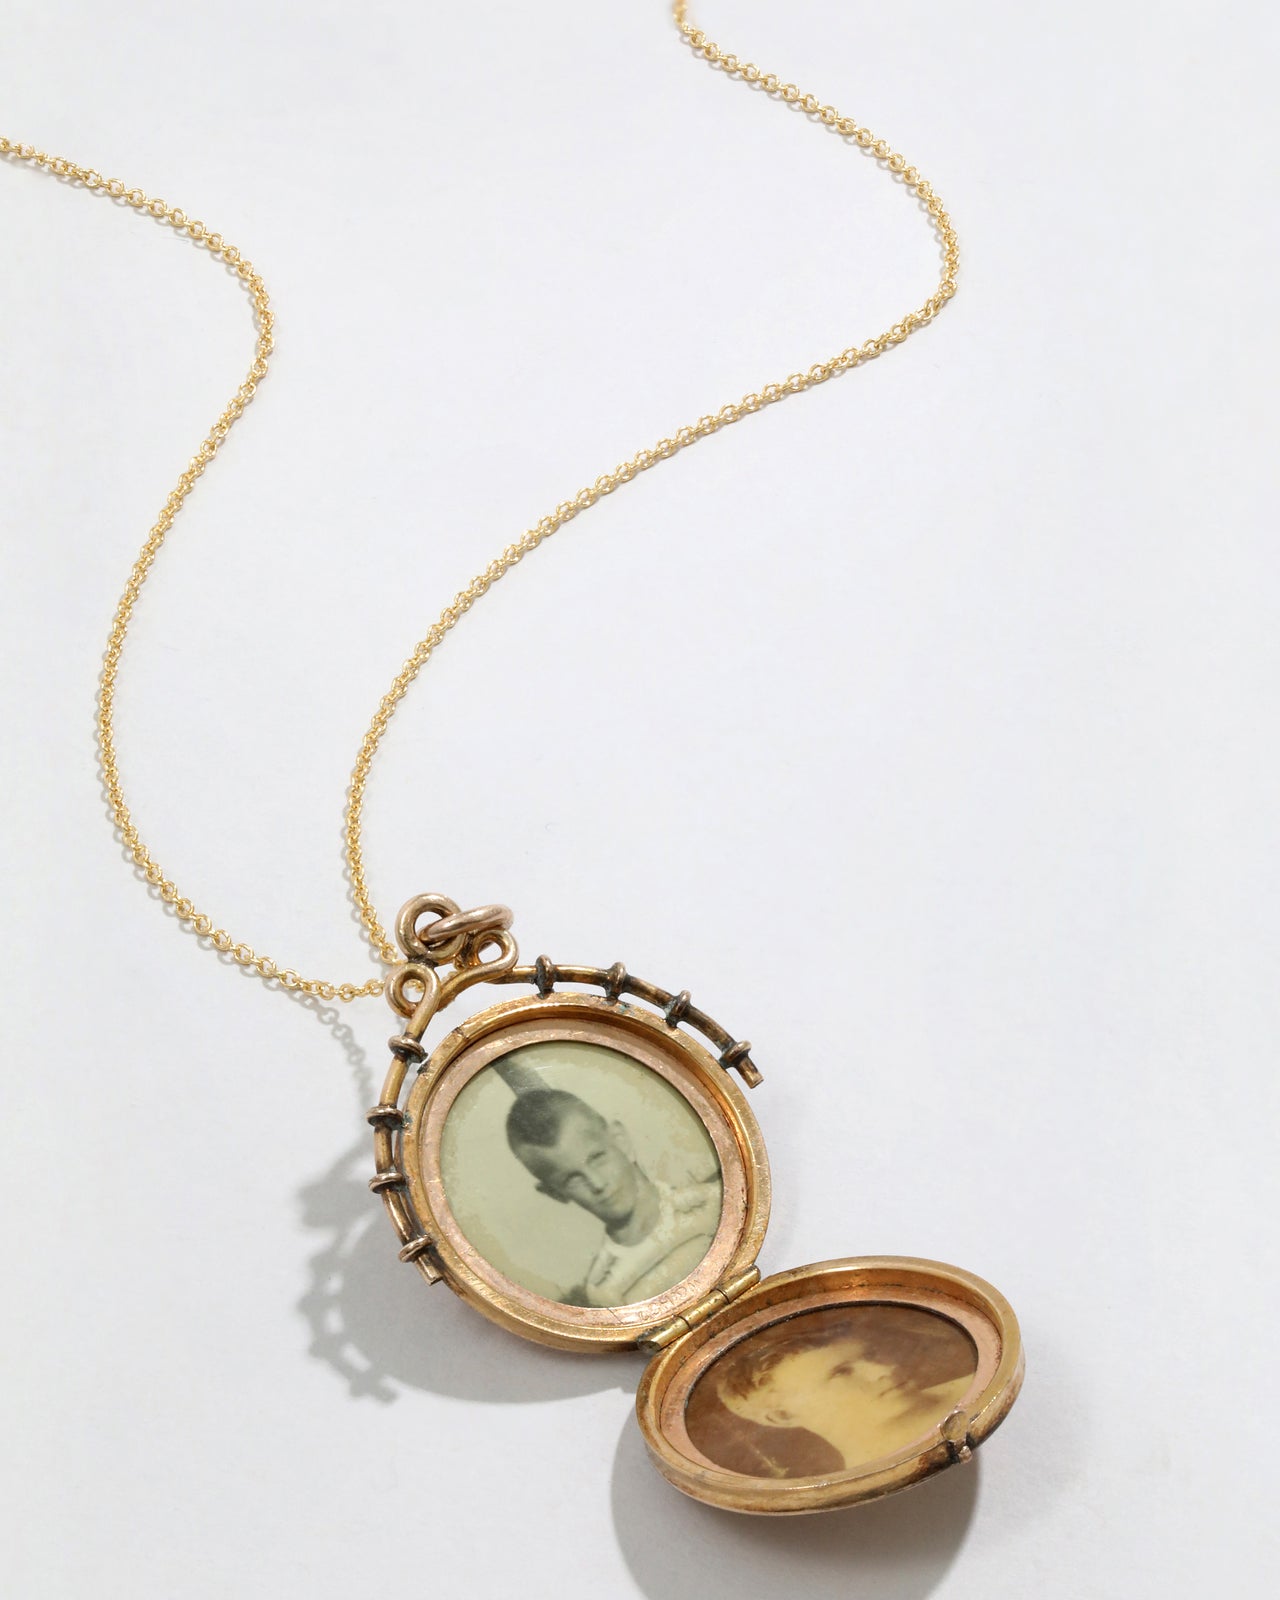 Antique 1800s Victorian 14k Gold Filled Ornate Locket Necklace - Photo 2